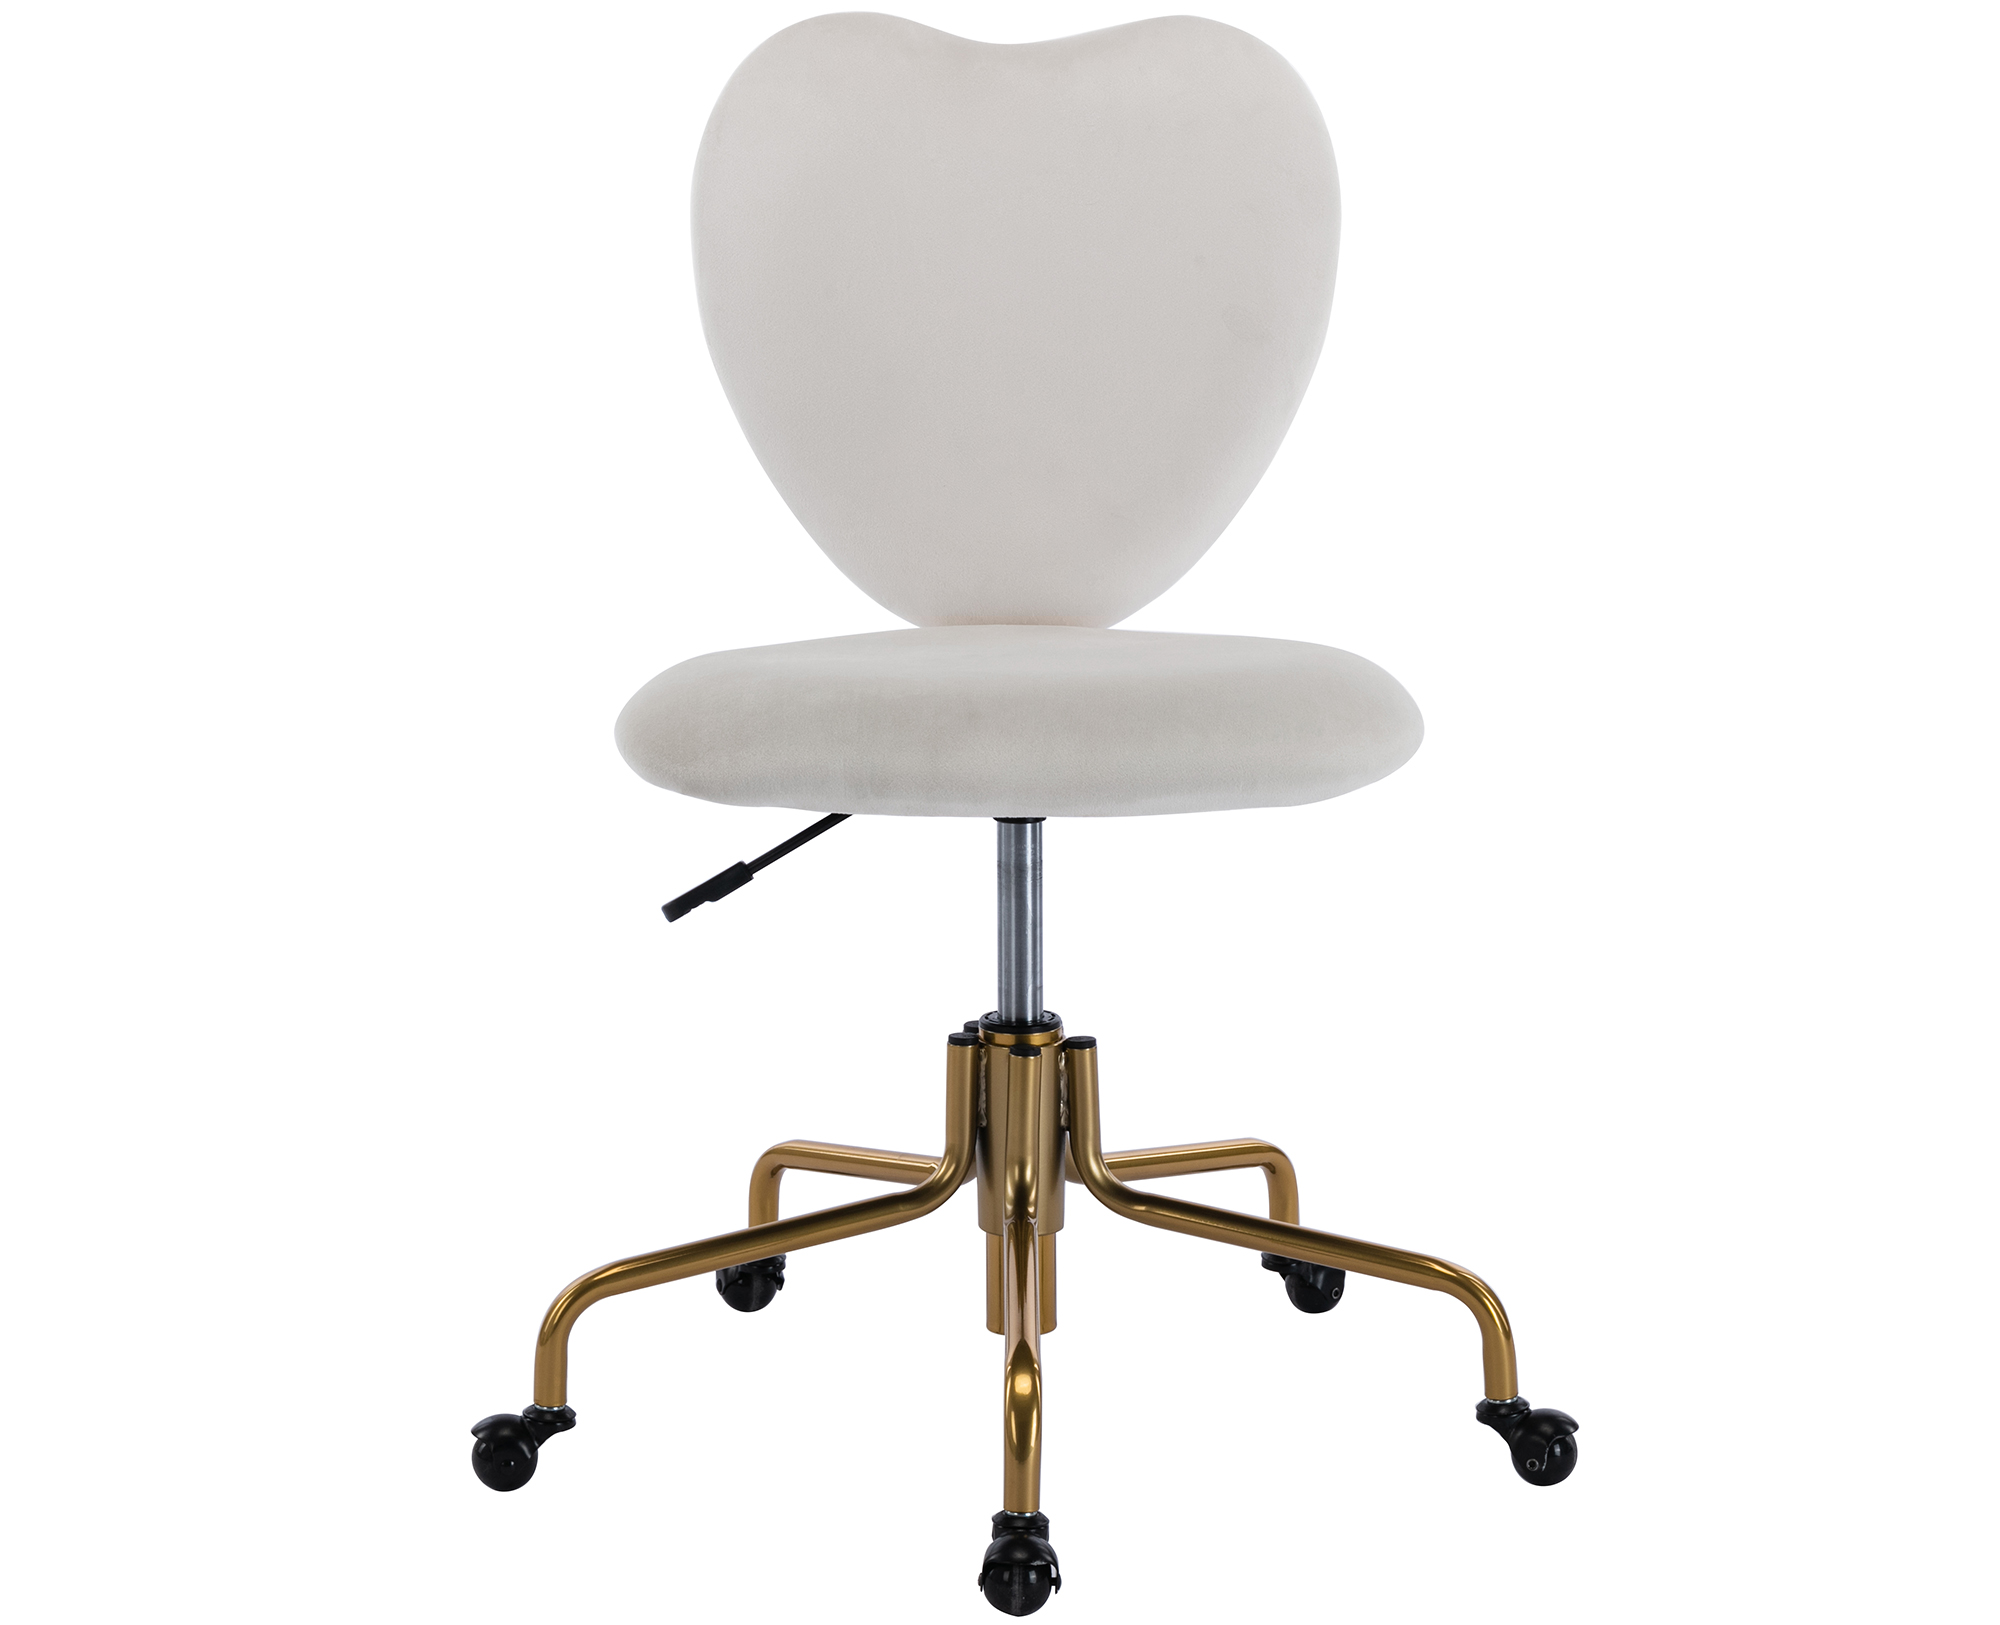 Adjustable Swivel Home Office Desk Chair with Cute Heart Shape Design Back Wheels